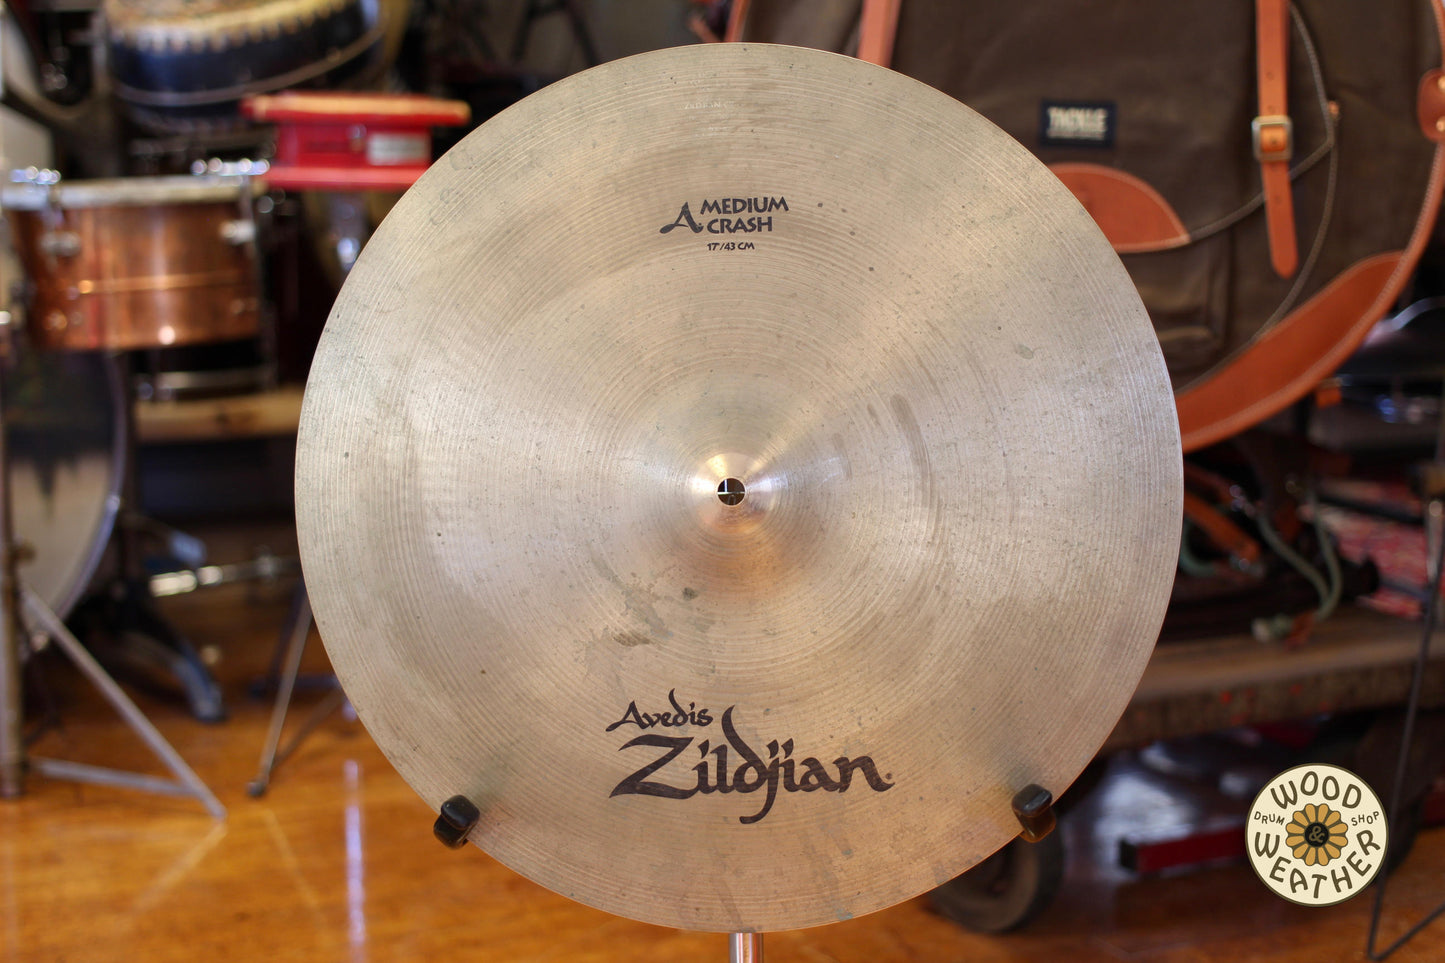 2001 Avedis Zildjian 17" Medium Crash Cymbal 1435g